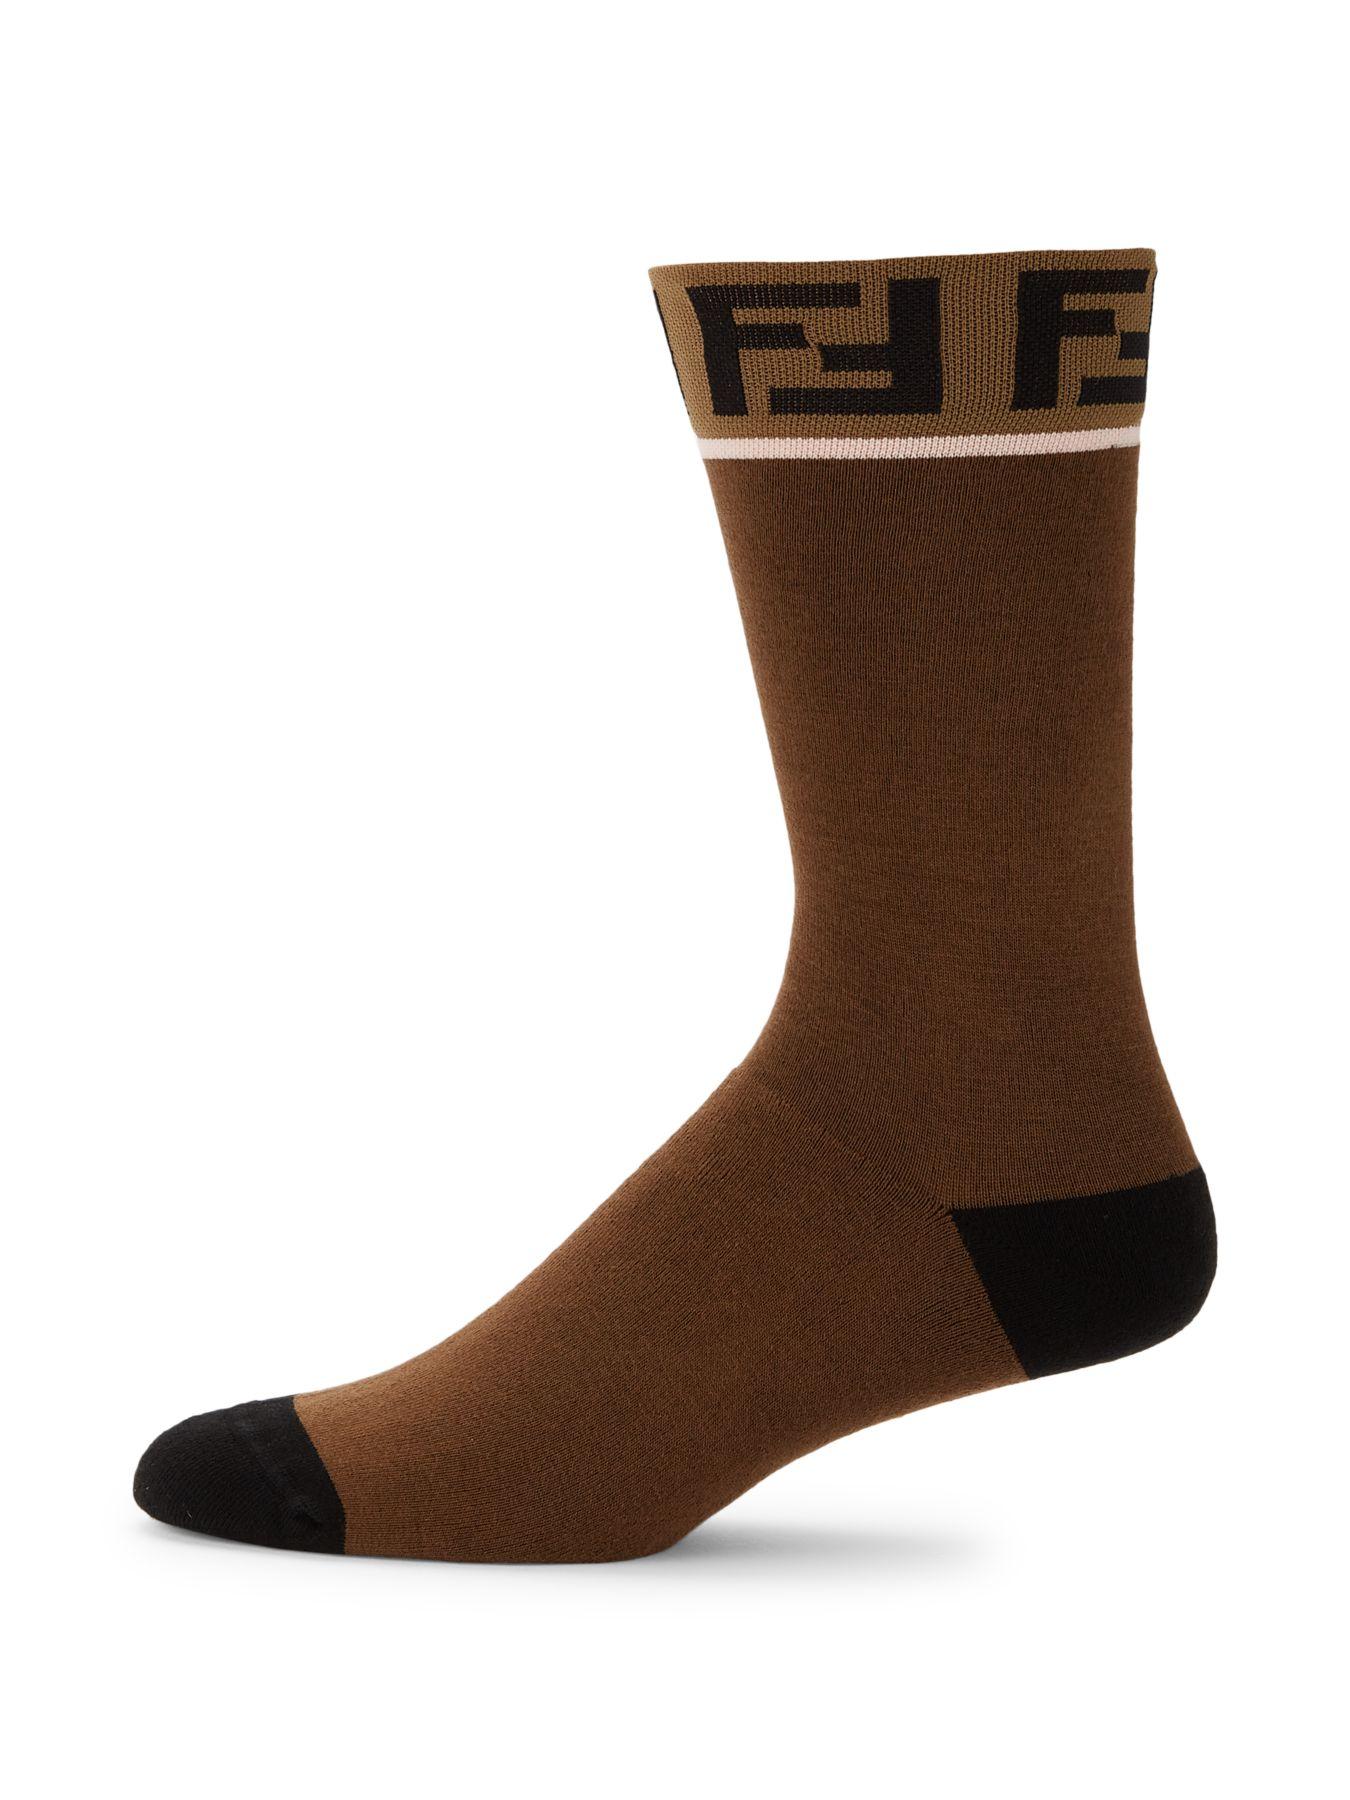 Fendi Cotton Double-f Logo Trim Socks in Chocolate (Brown) for Men - Lyst